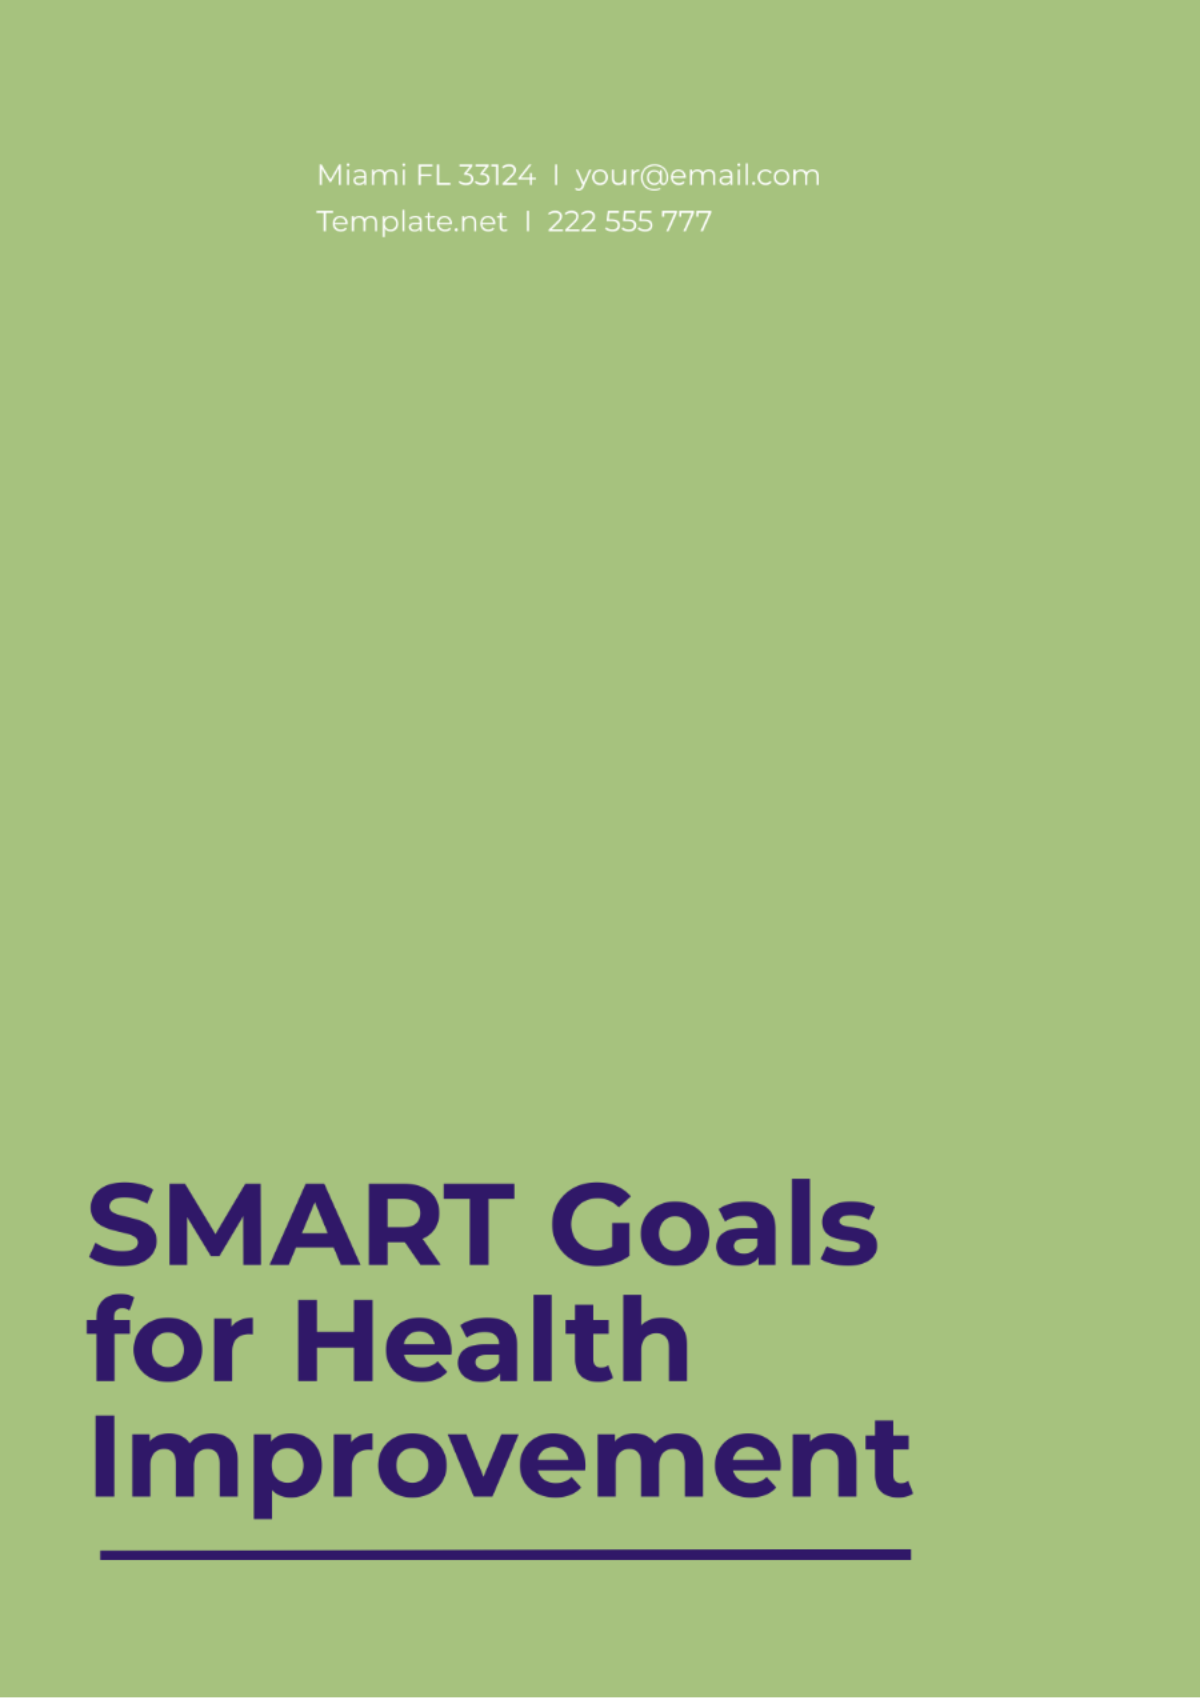 SMART Goals Template for Health Improvement